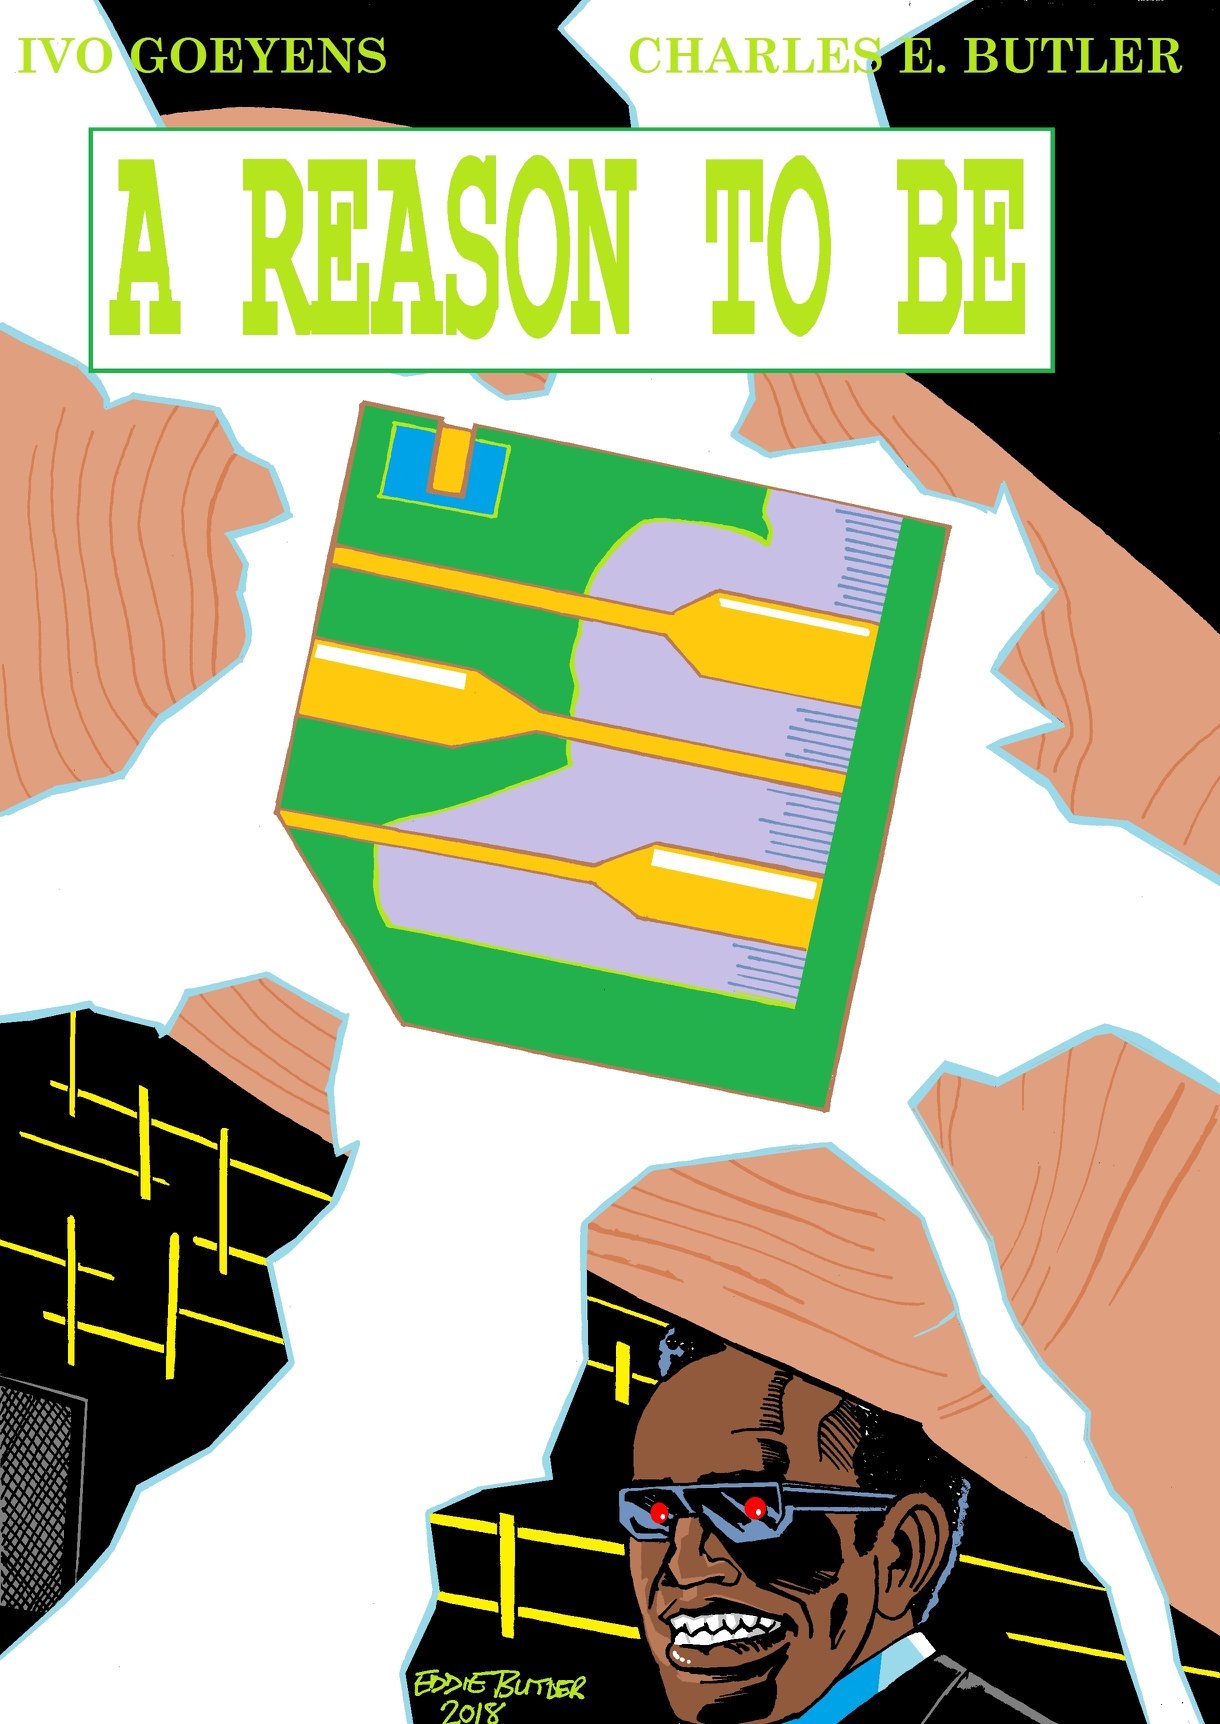 Ivo Goeyen’s dystopian graphic novel A Reason to Be!